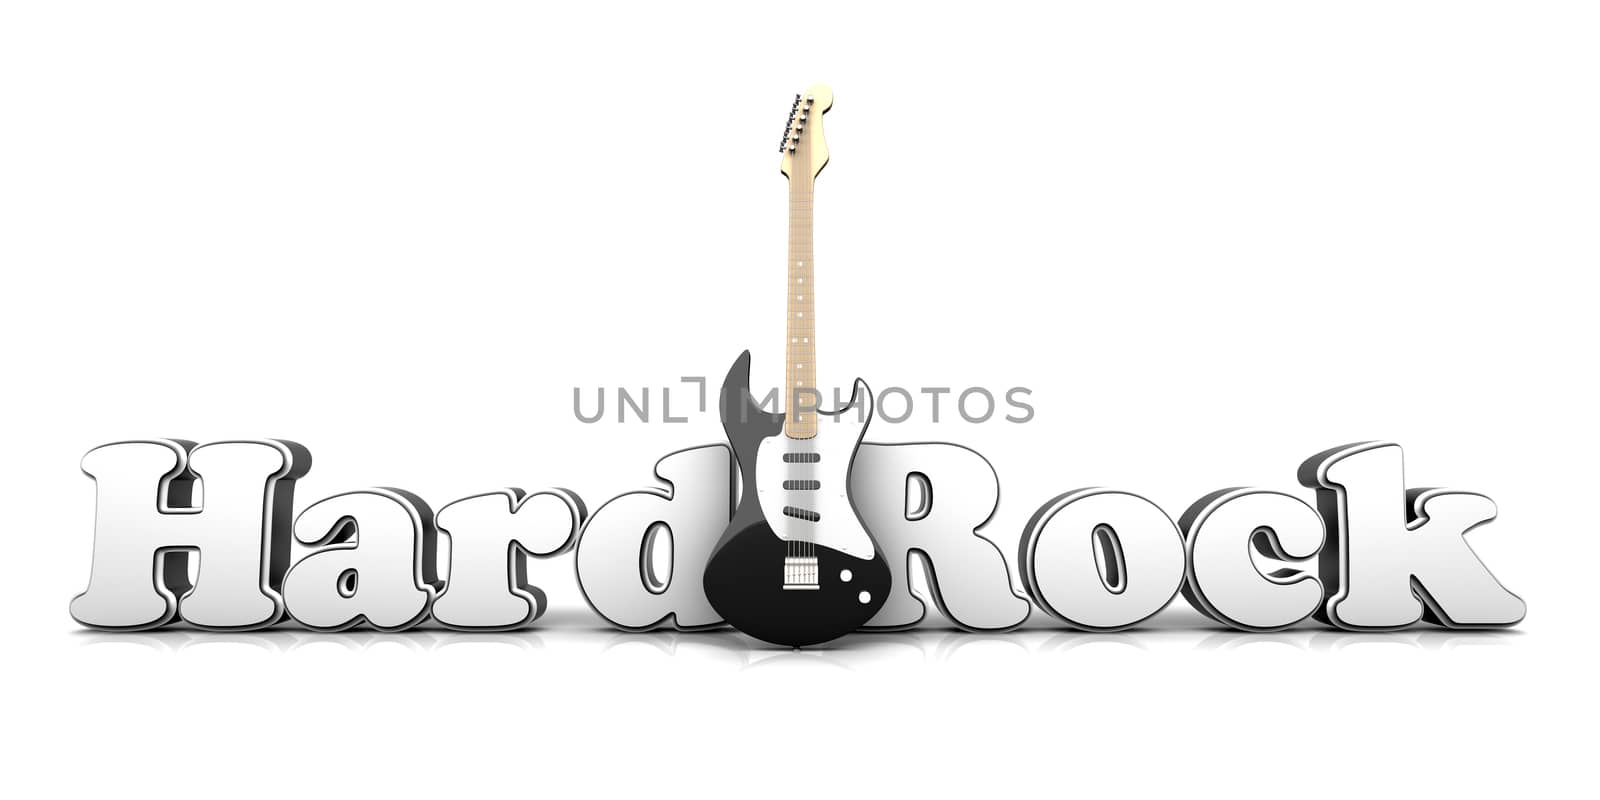 Hardrock word with a guitar. 3D Illustration.